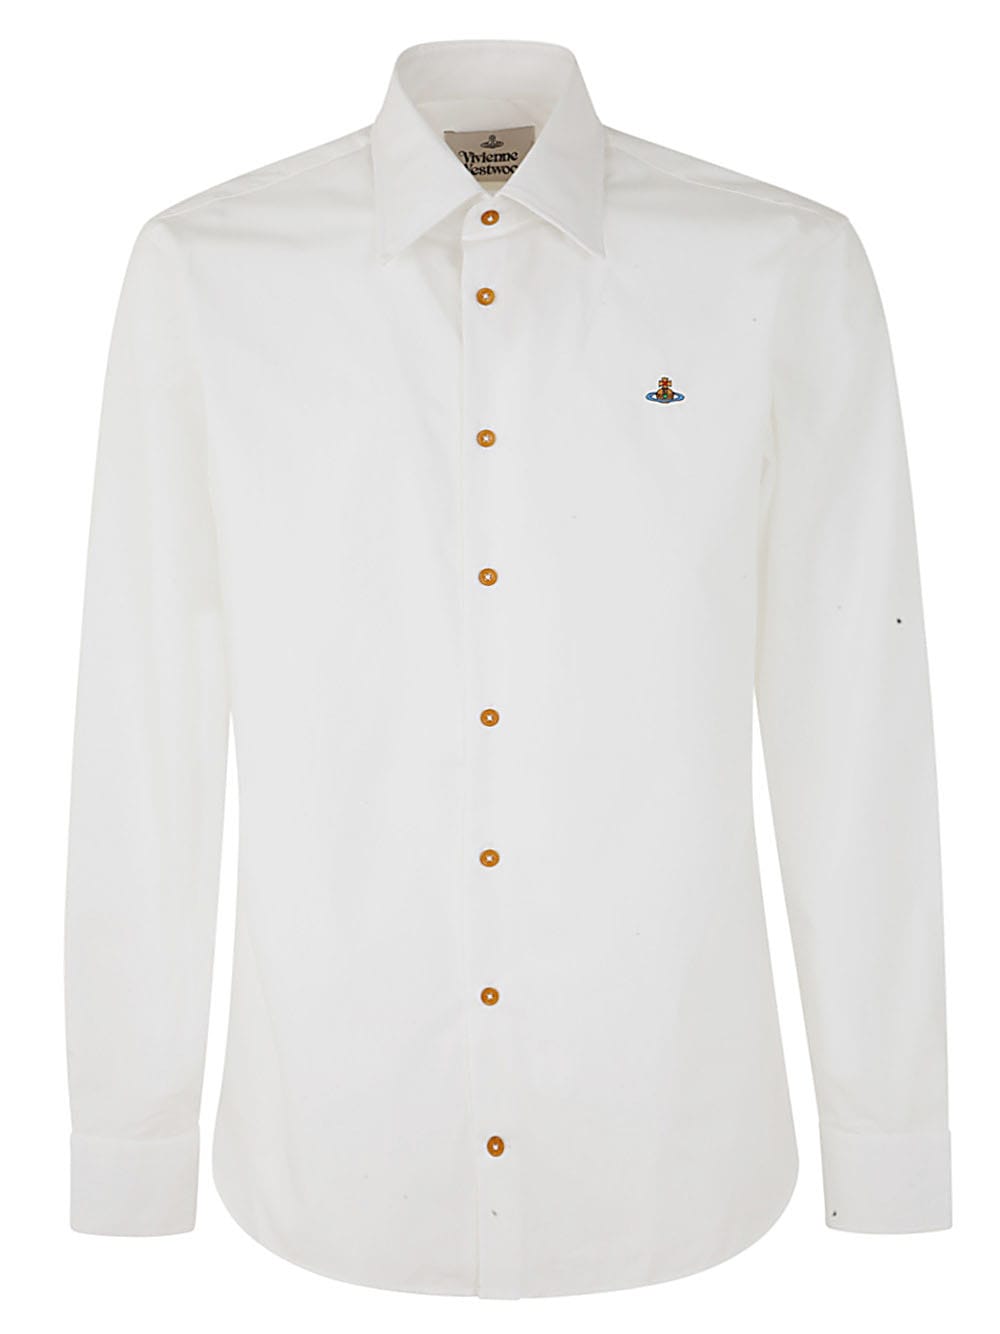 Vivienne Westwood Ghost Shirt